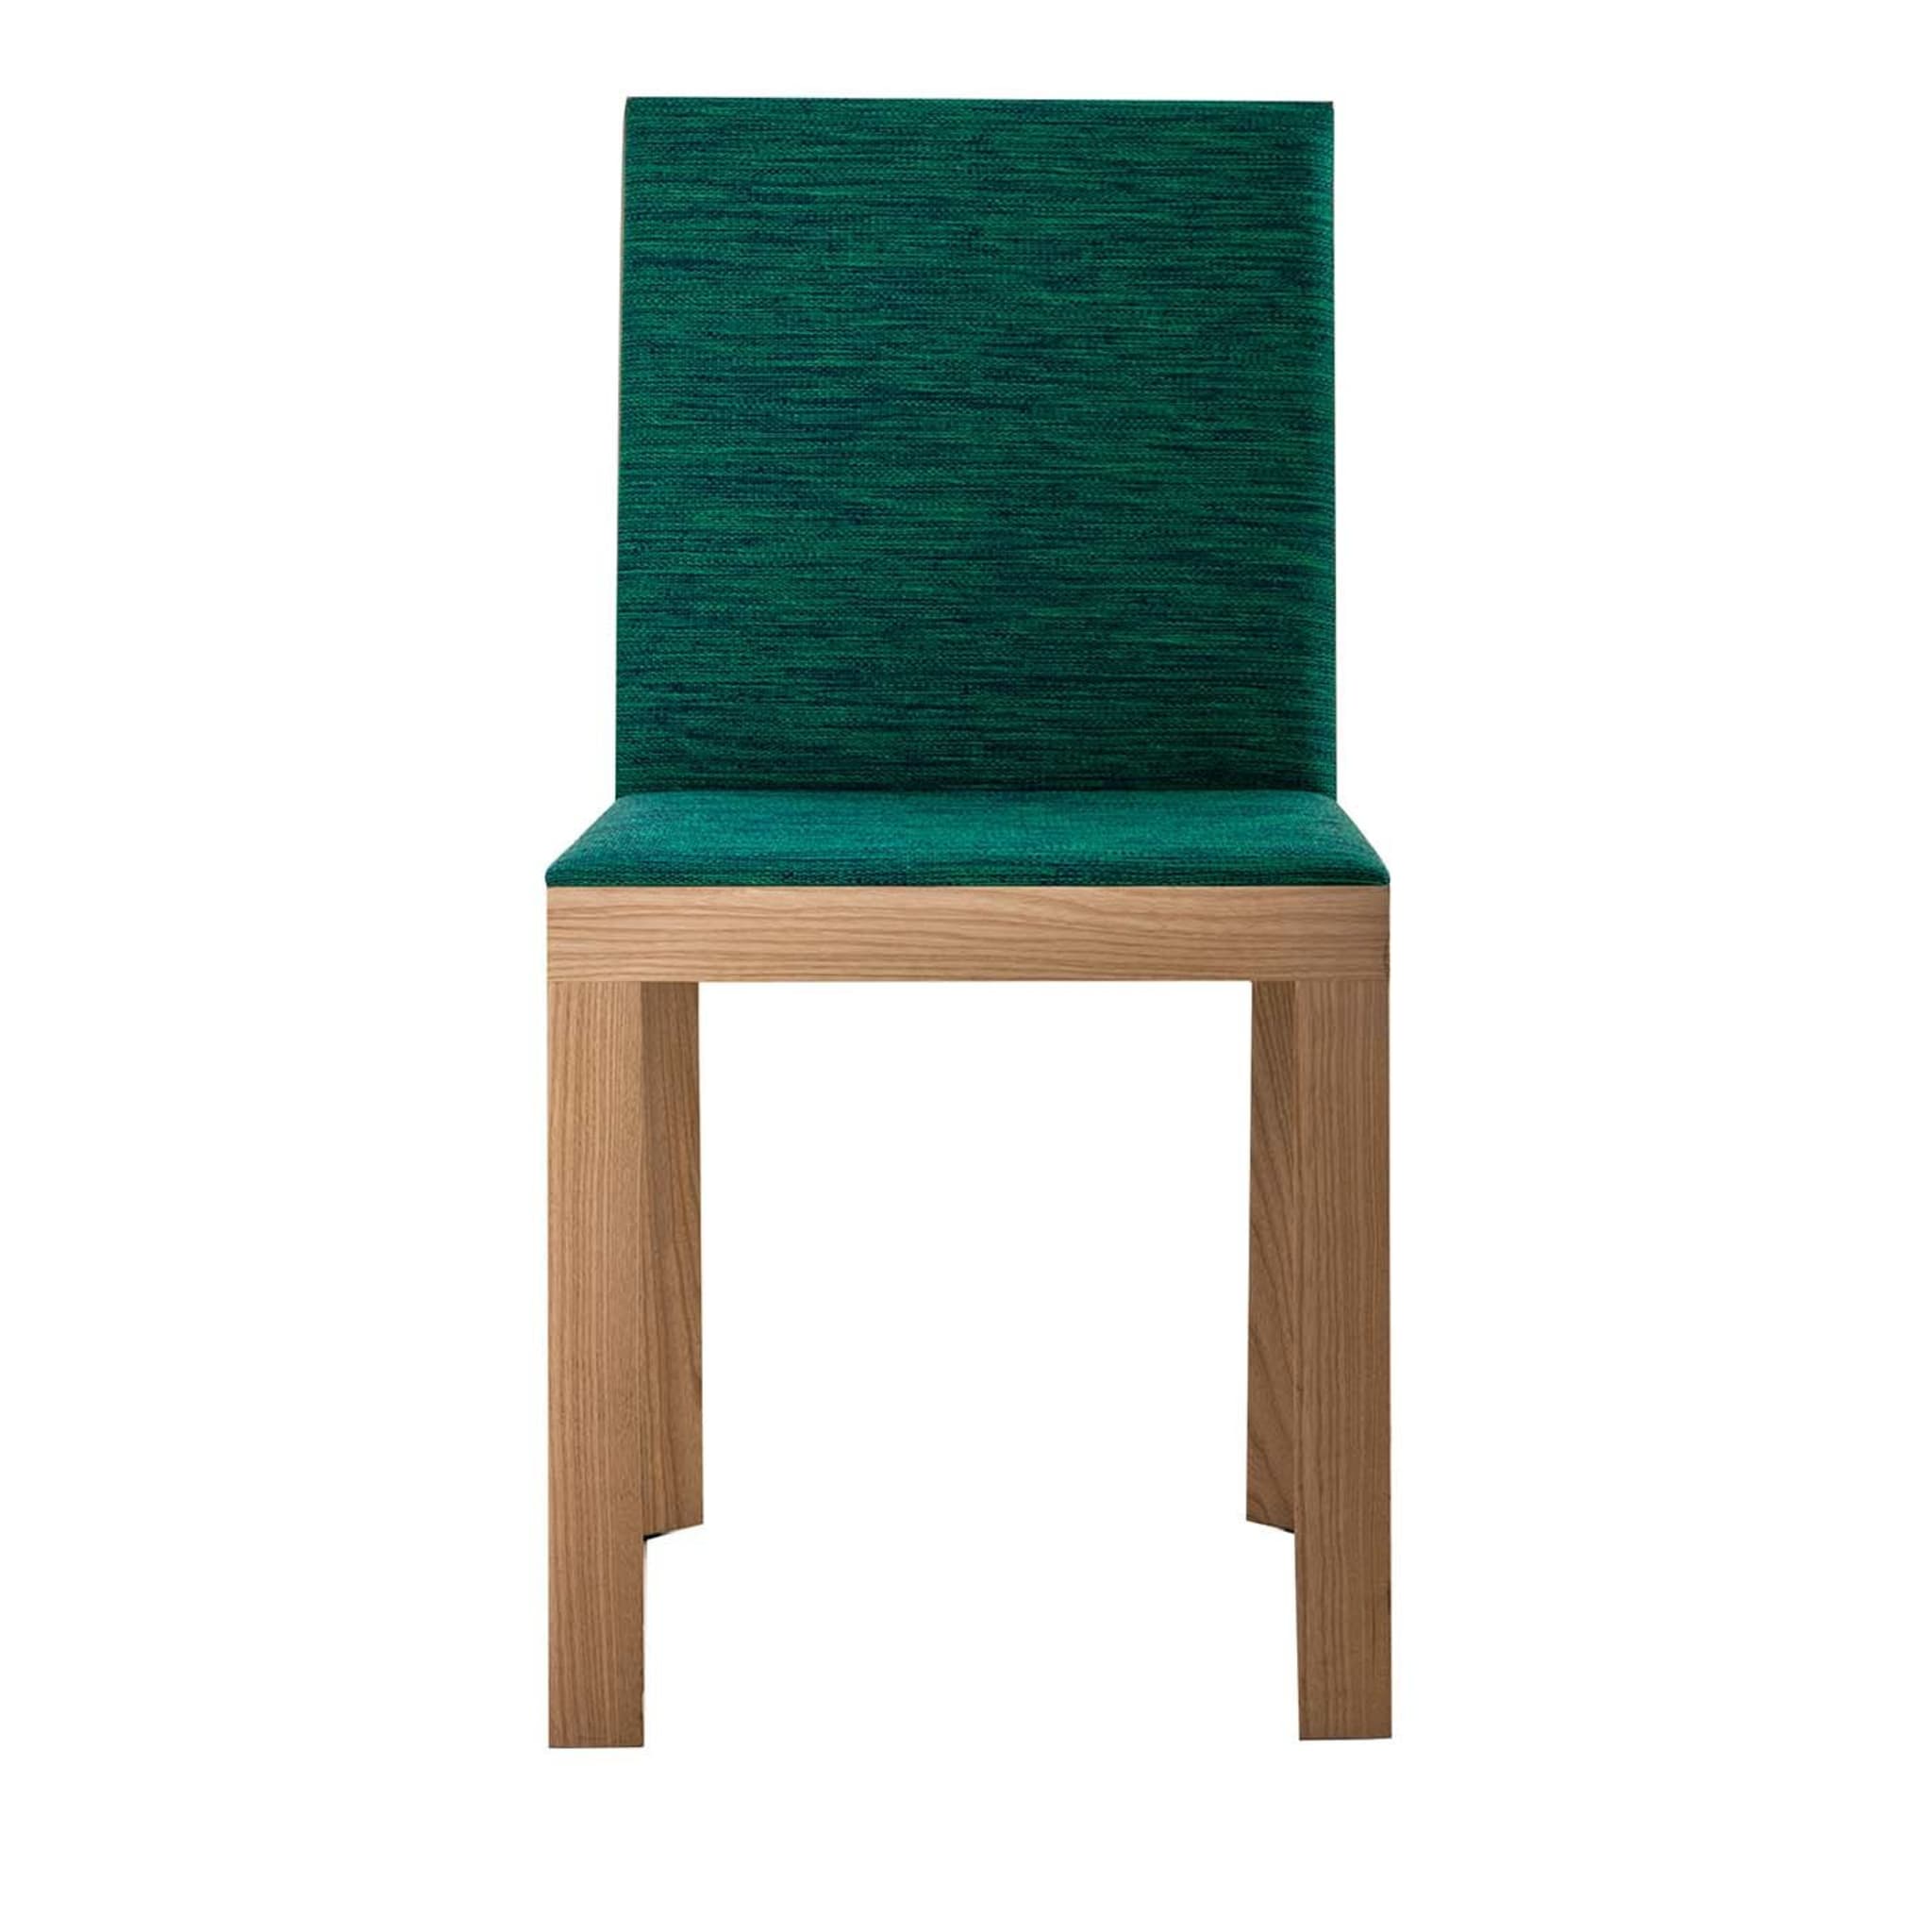 BD 20 L Chair by Bartoli Design - Main view